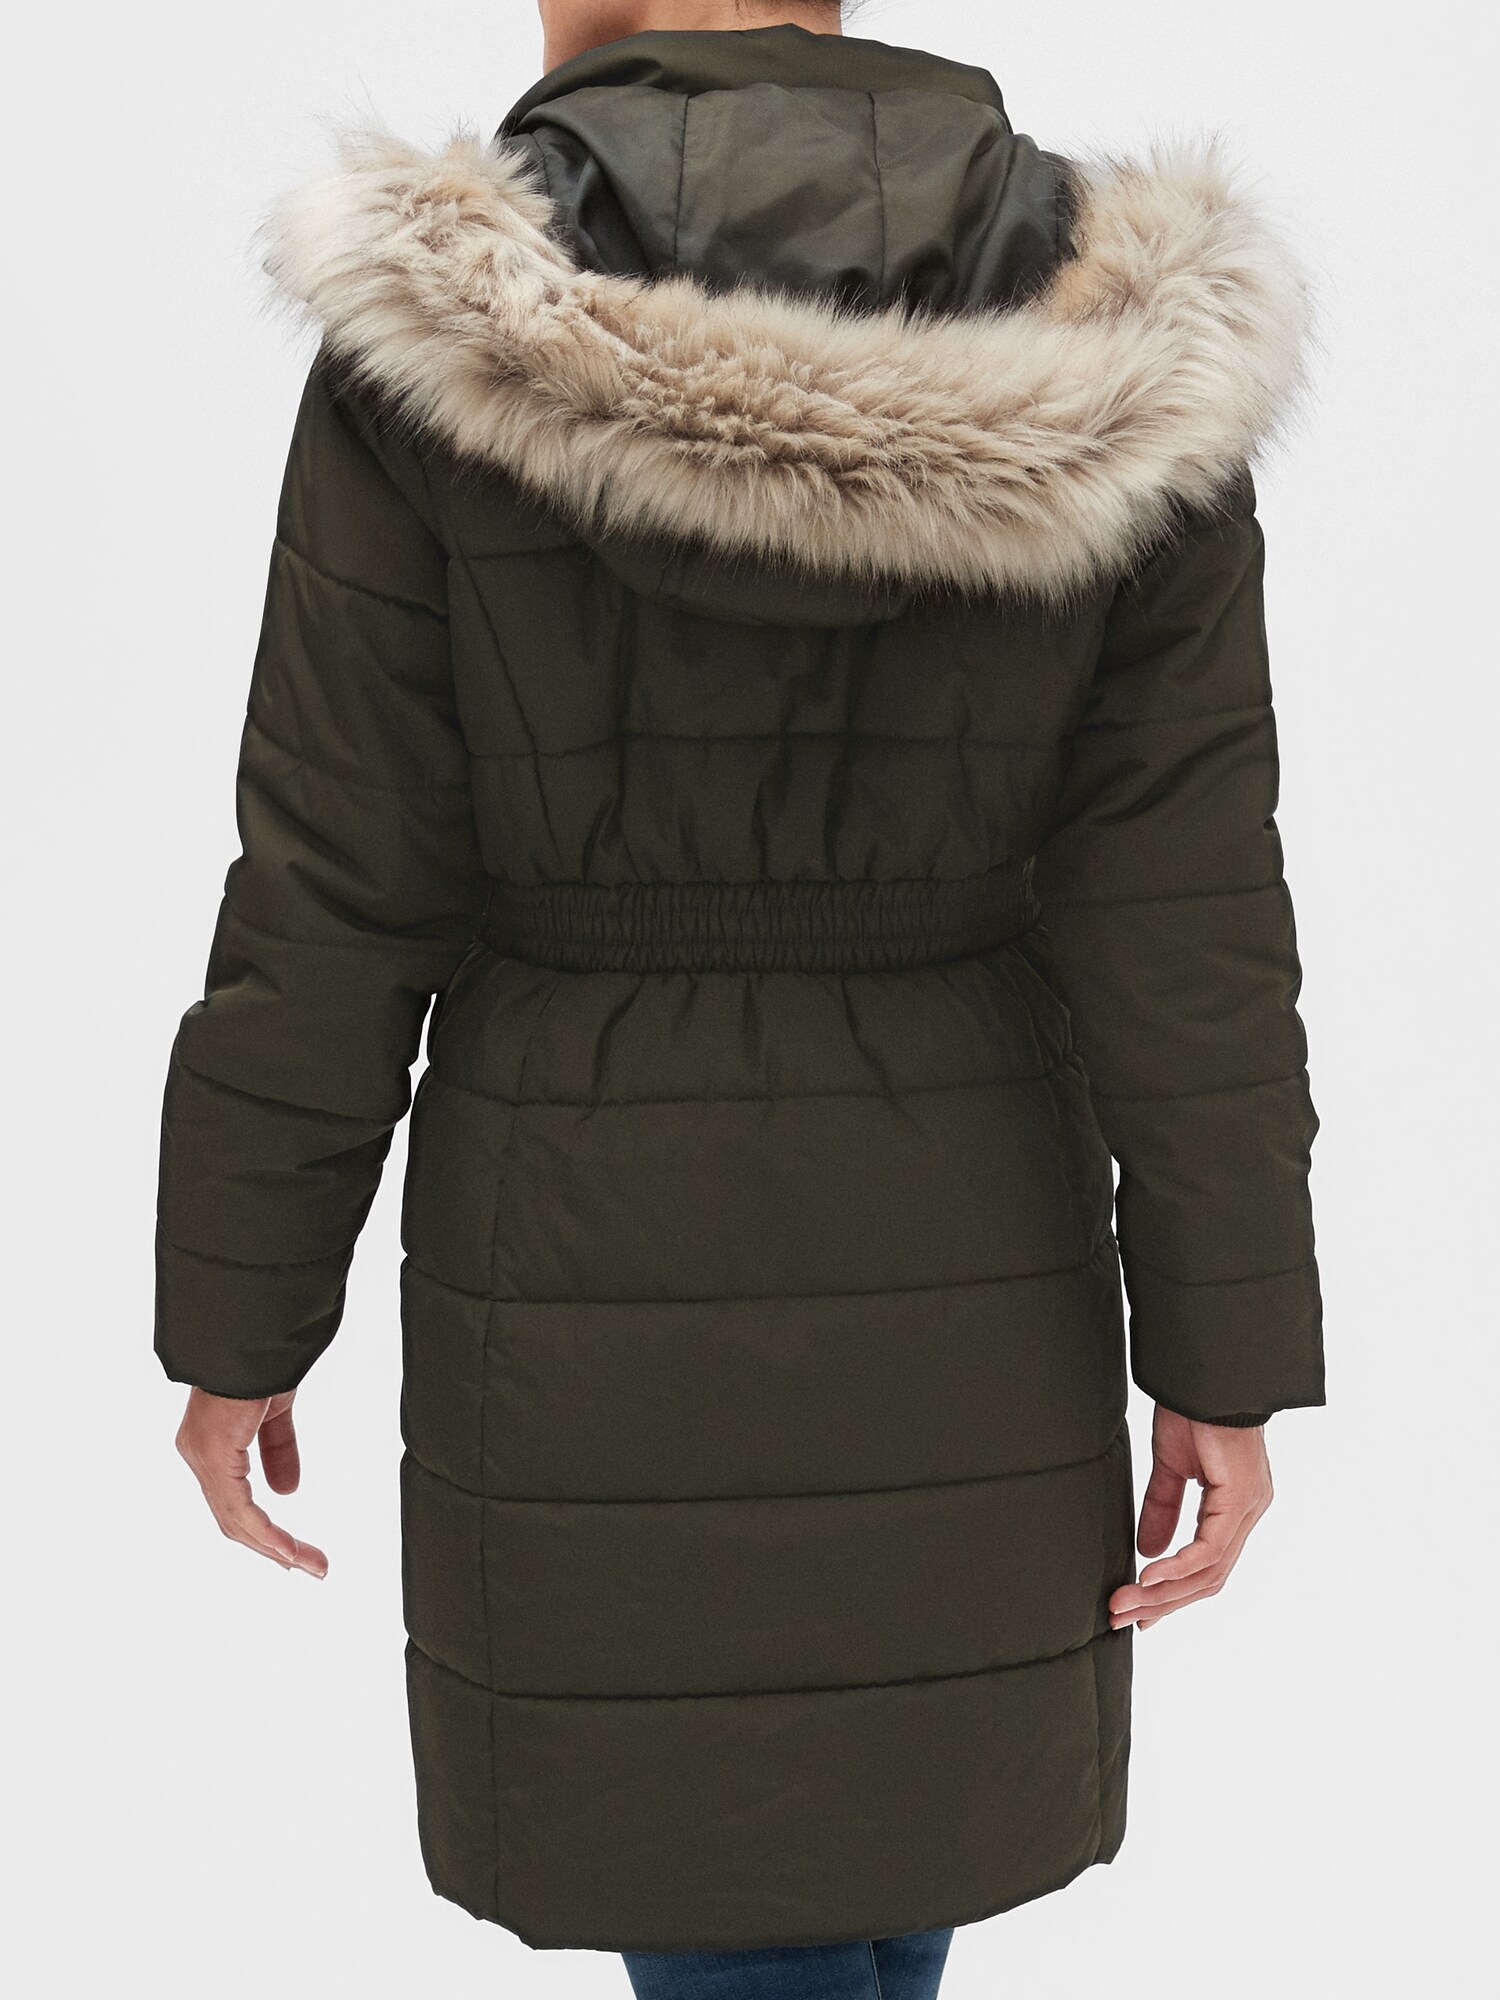 puffer jacket with fur hood long